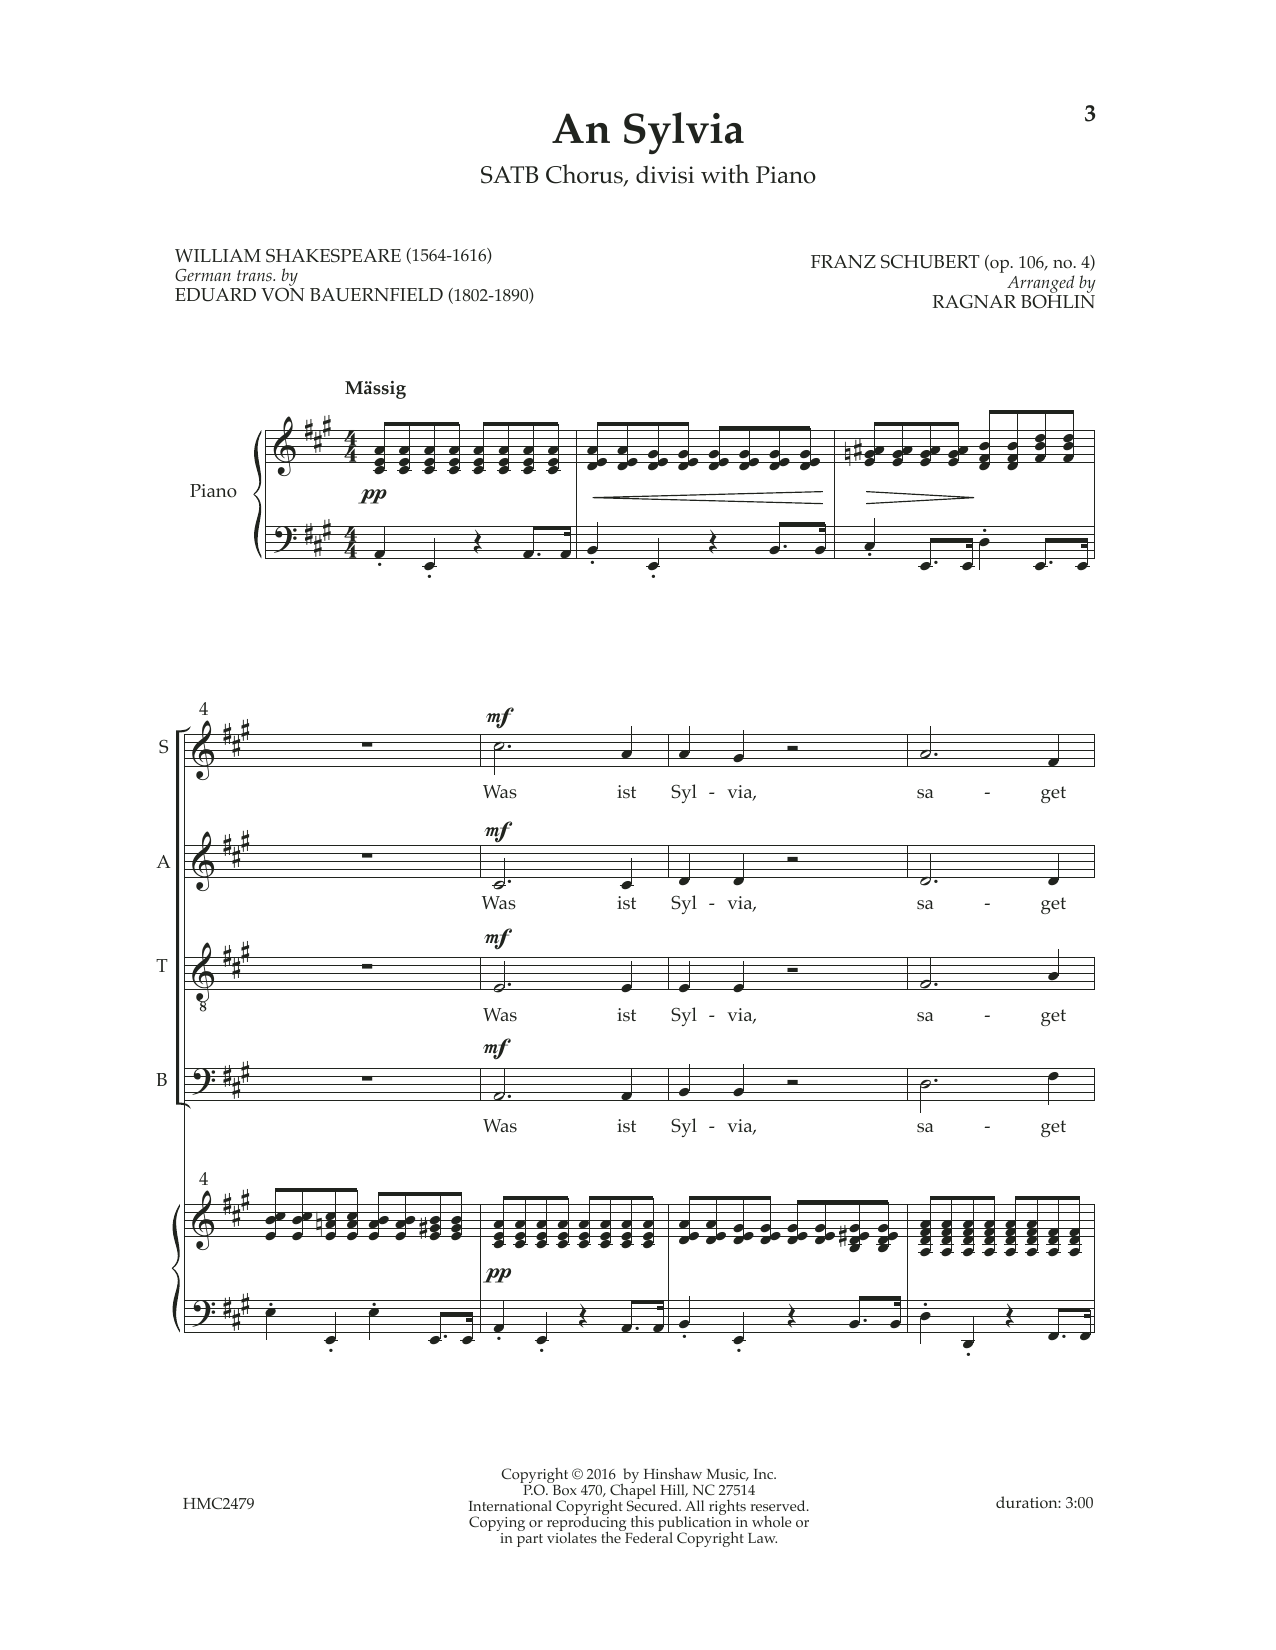 Download Franz Schubert An Sylvia (op. 106, No. 4) (arr. Ragnar Bohlin) Sheet Music and learn how to play SATB Choir PDF digital score in minutes